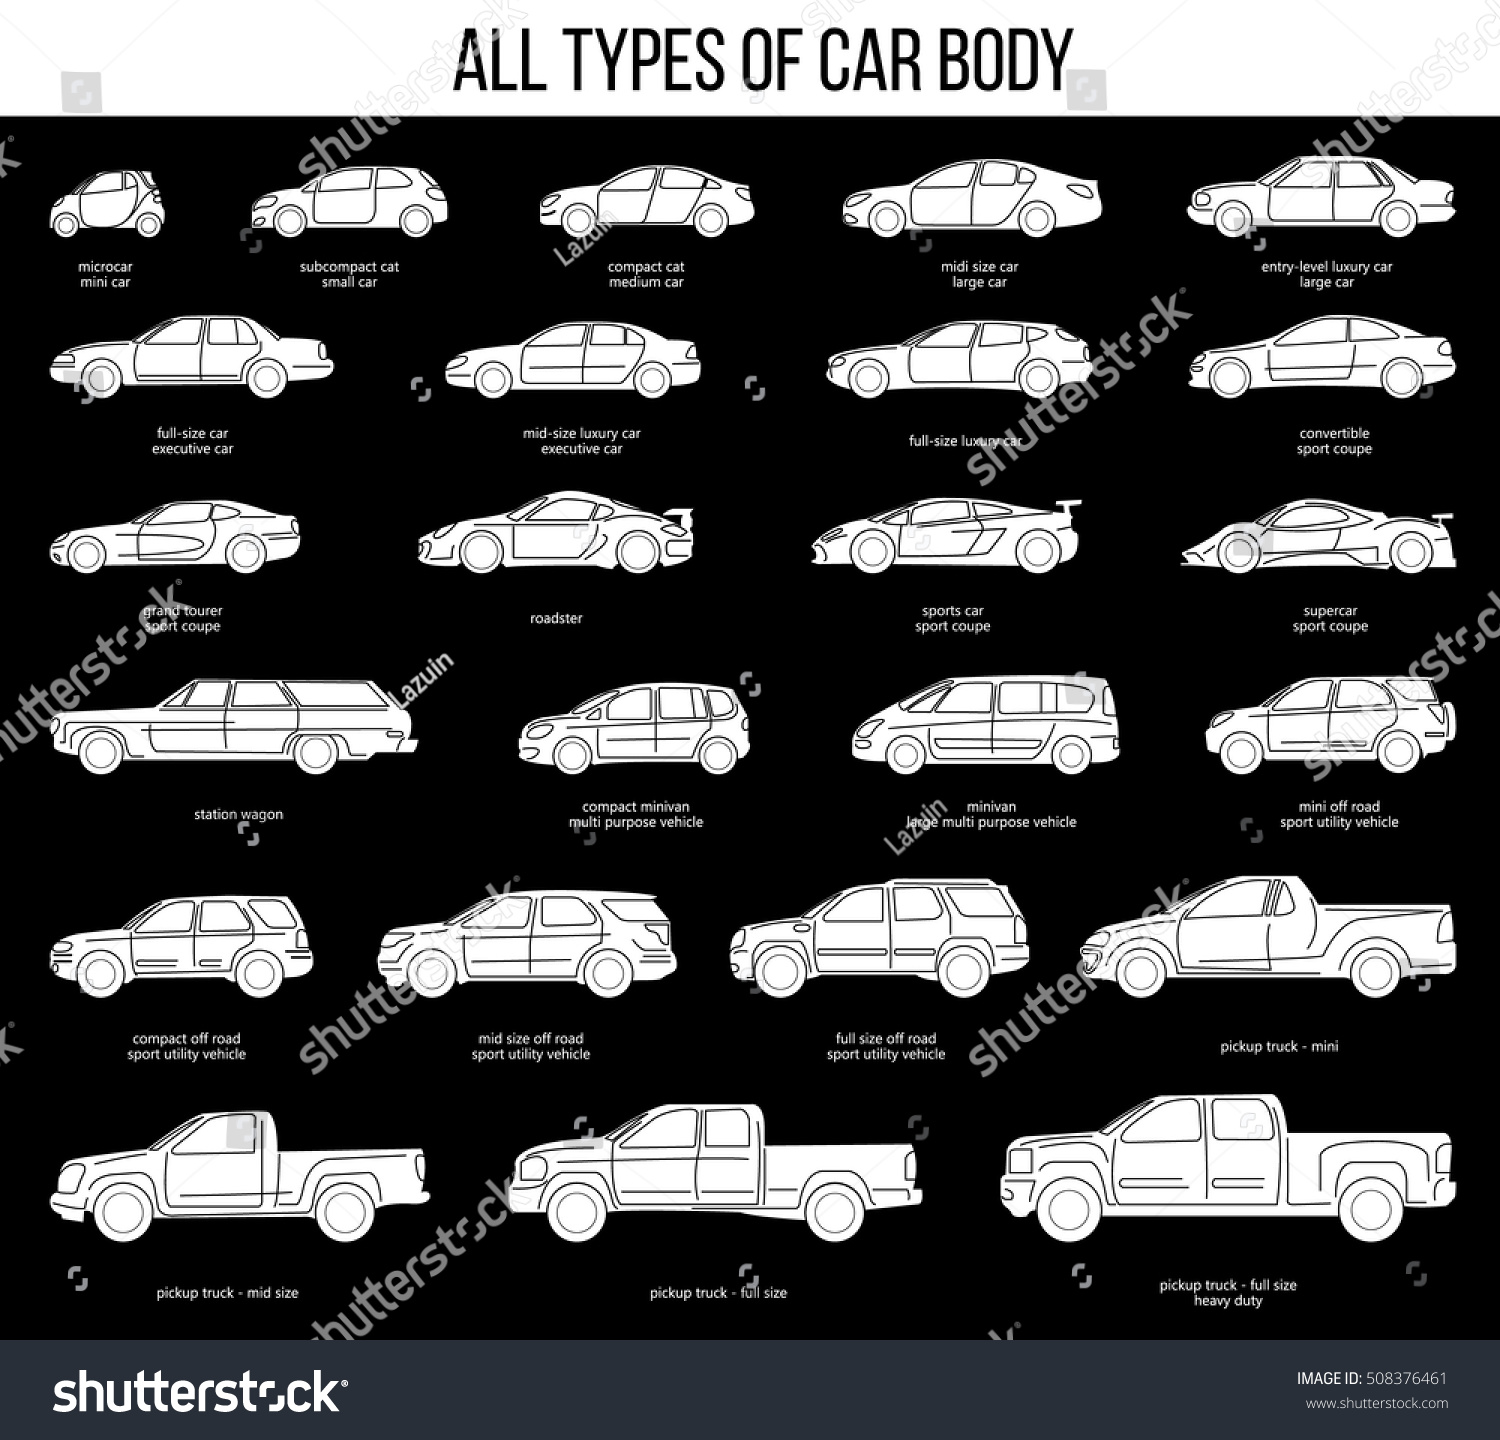 All Types Car Body Car Type Stock Vector 508376461  Shutterstock